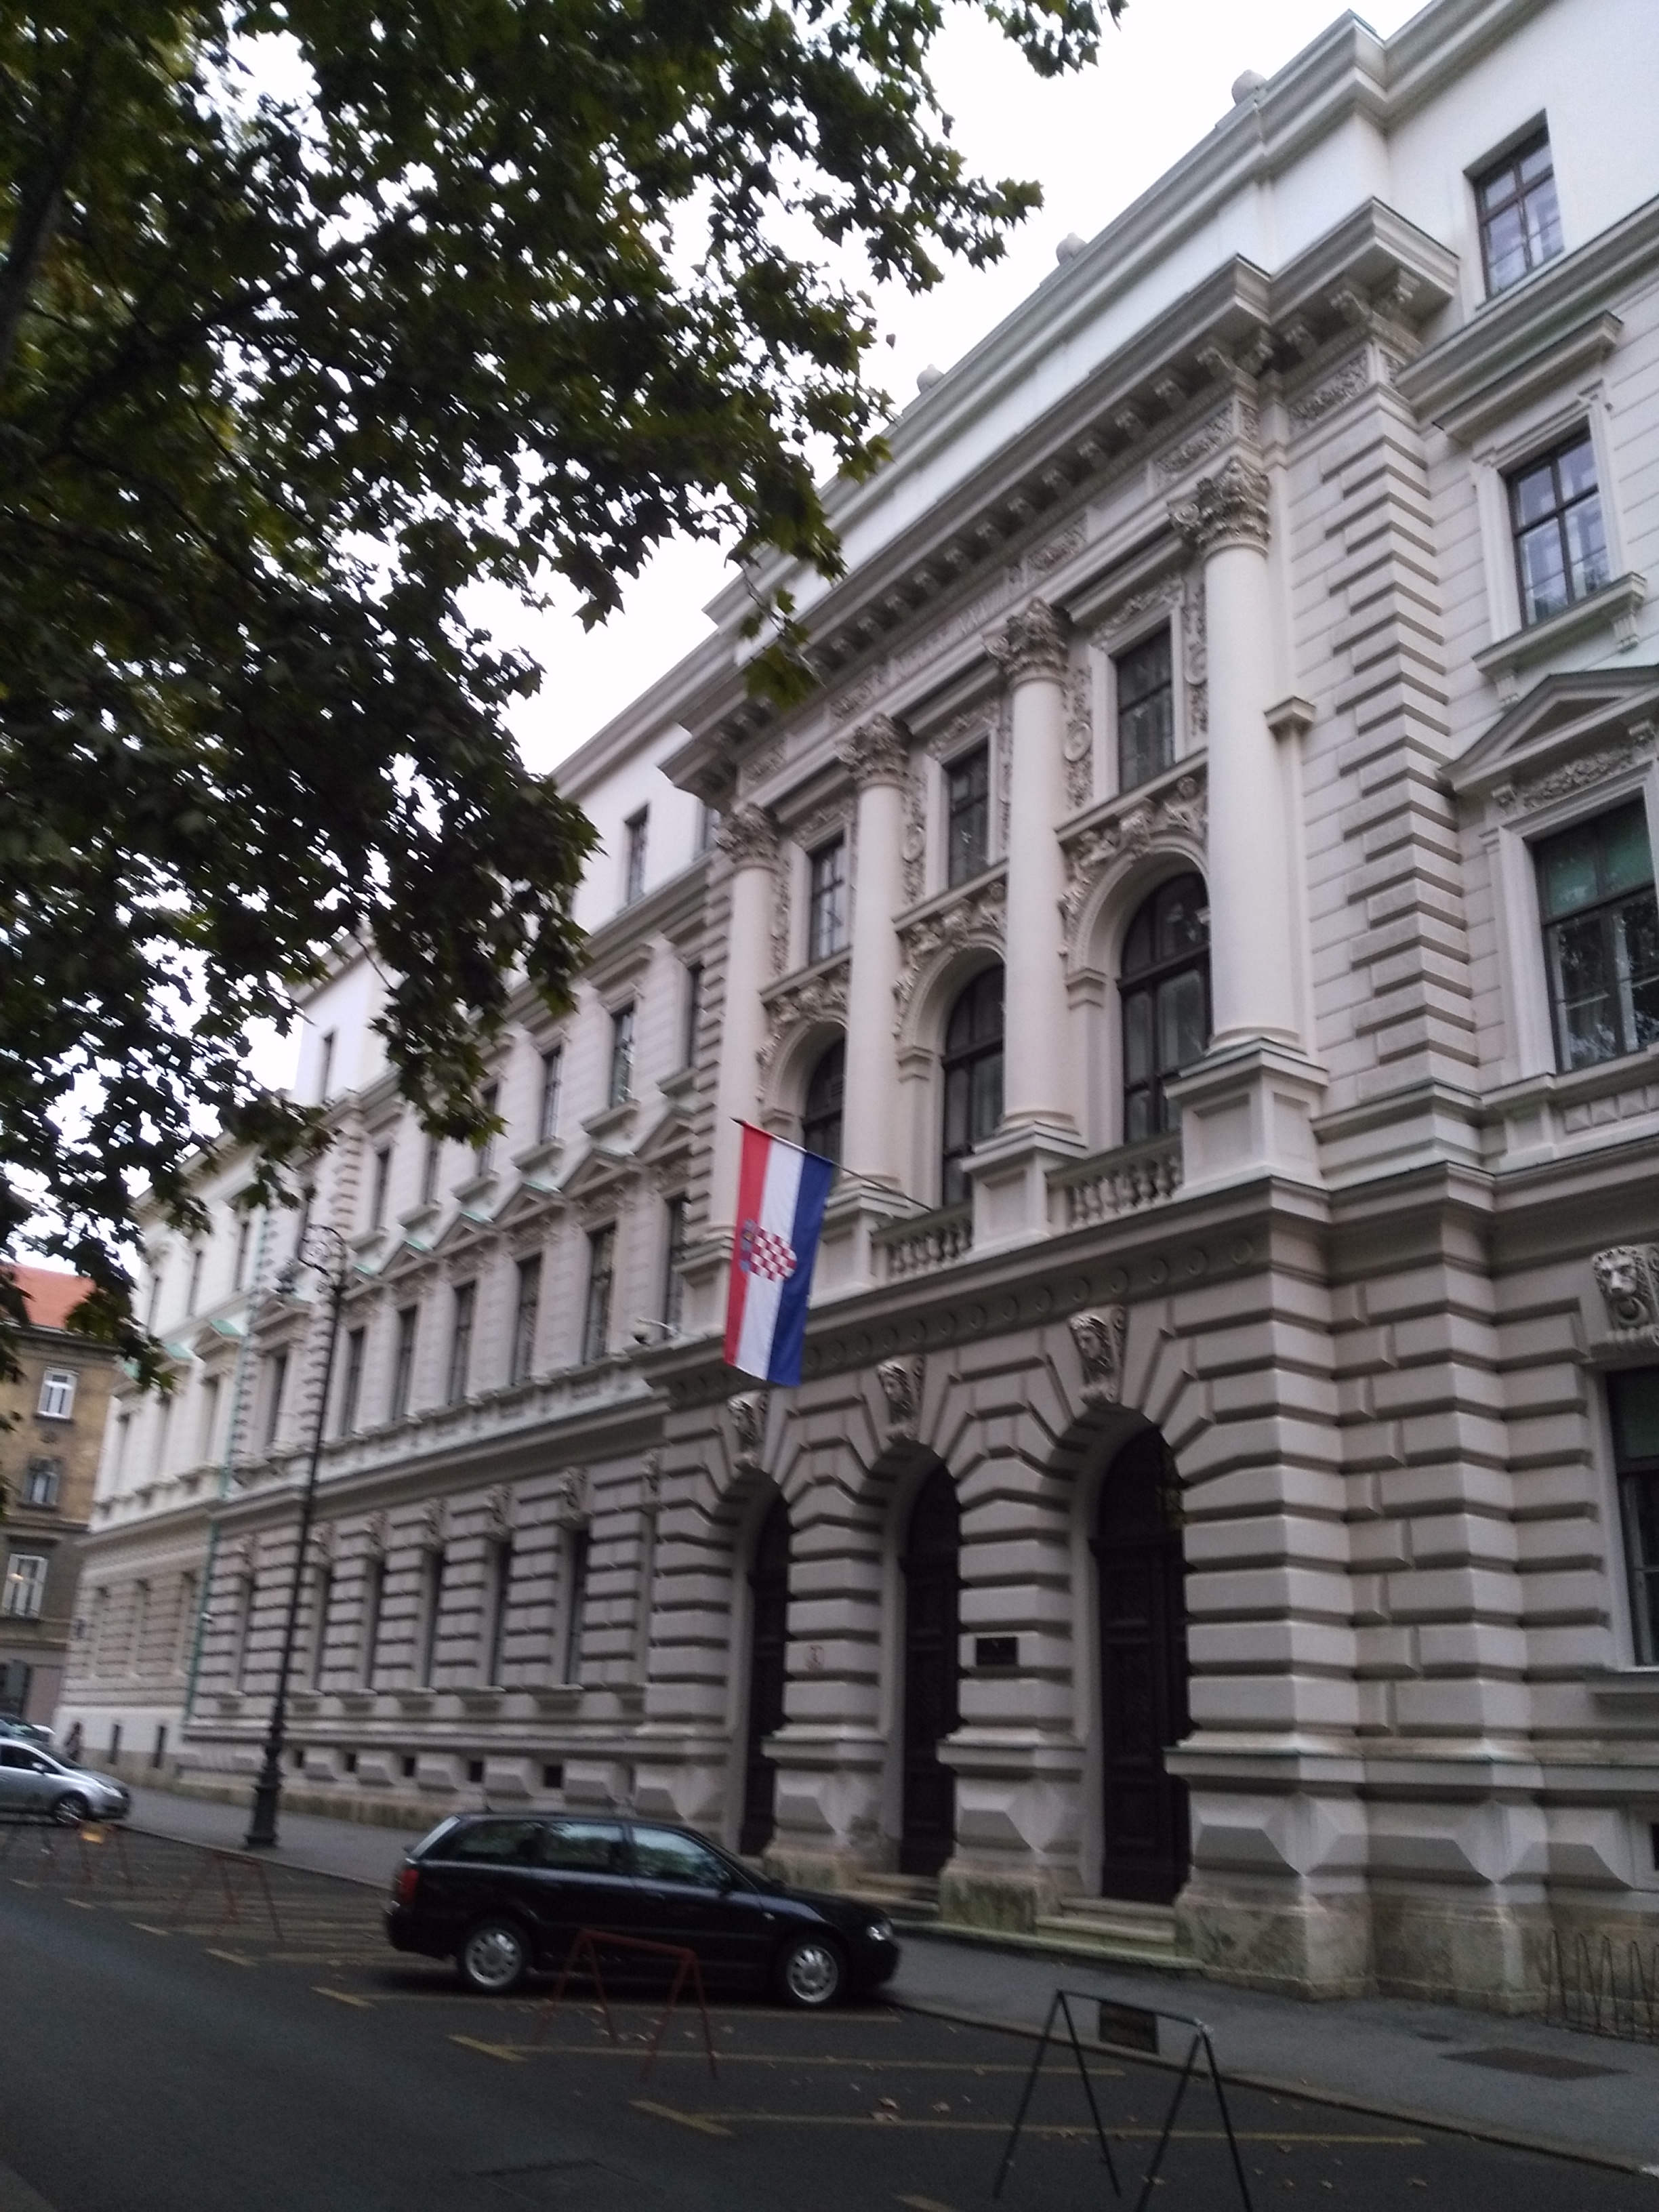 The building of the former District of Zagreb Public Prosecutor’s Office at Zrinski Square 5 in Zagreb (2016-28-09).